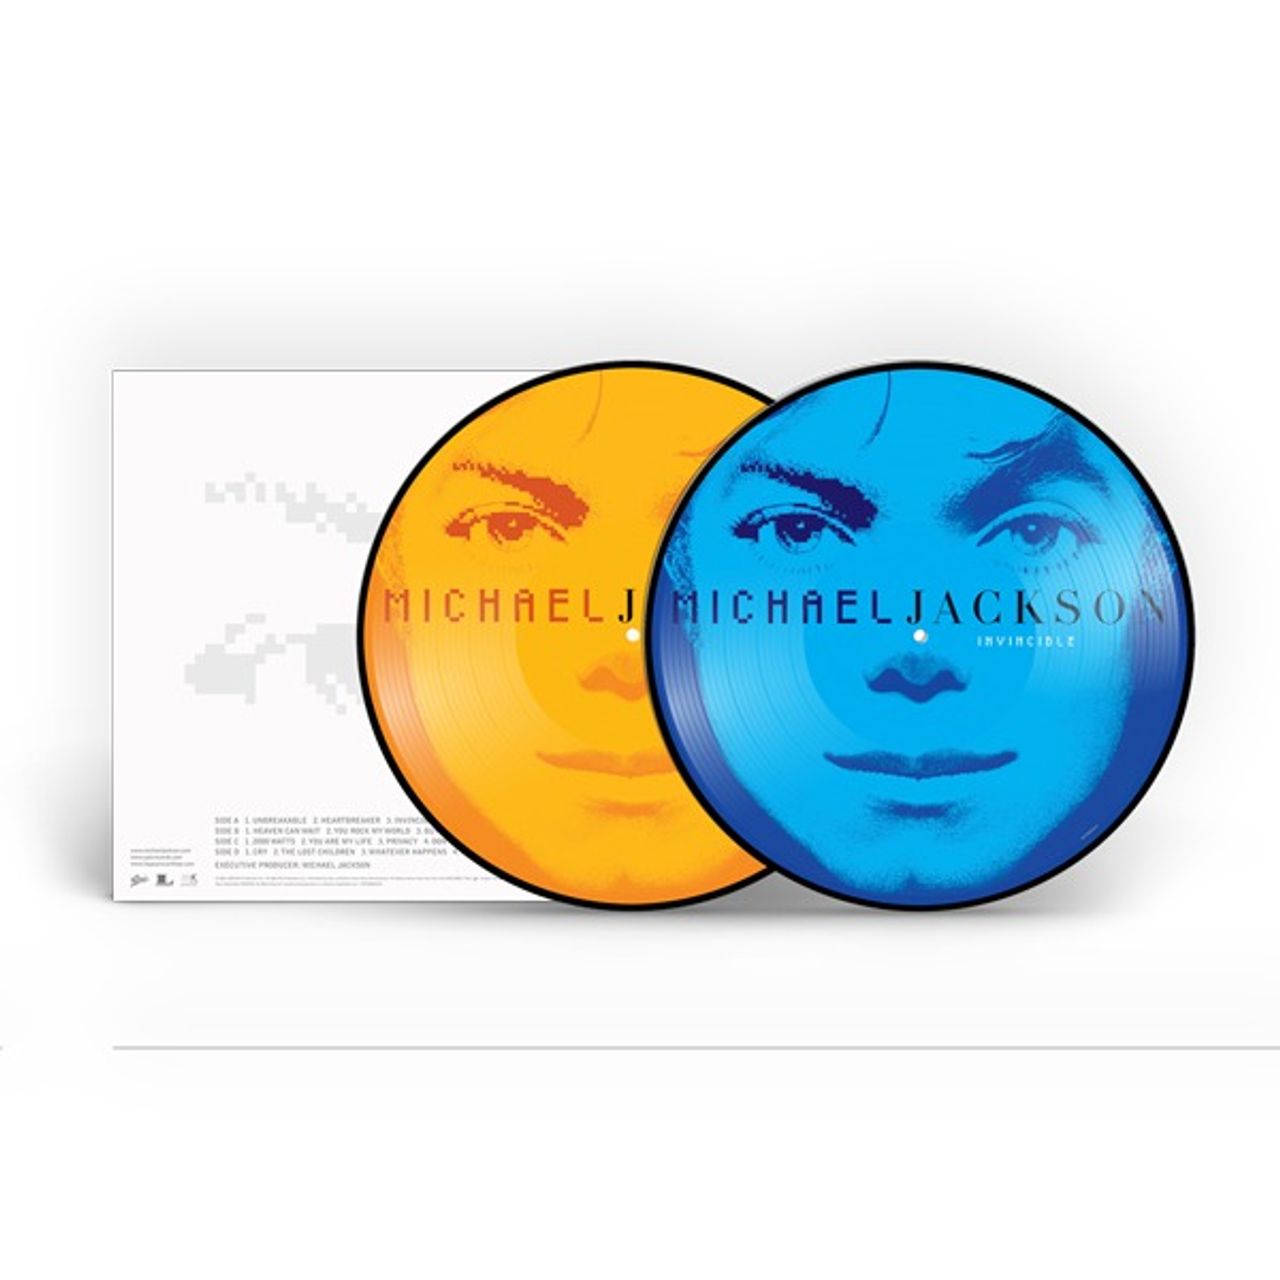 Michael Jackson | Thriller 25 CD Album (no sleeve) [EU]